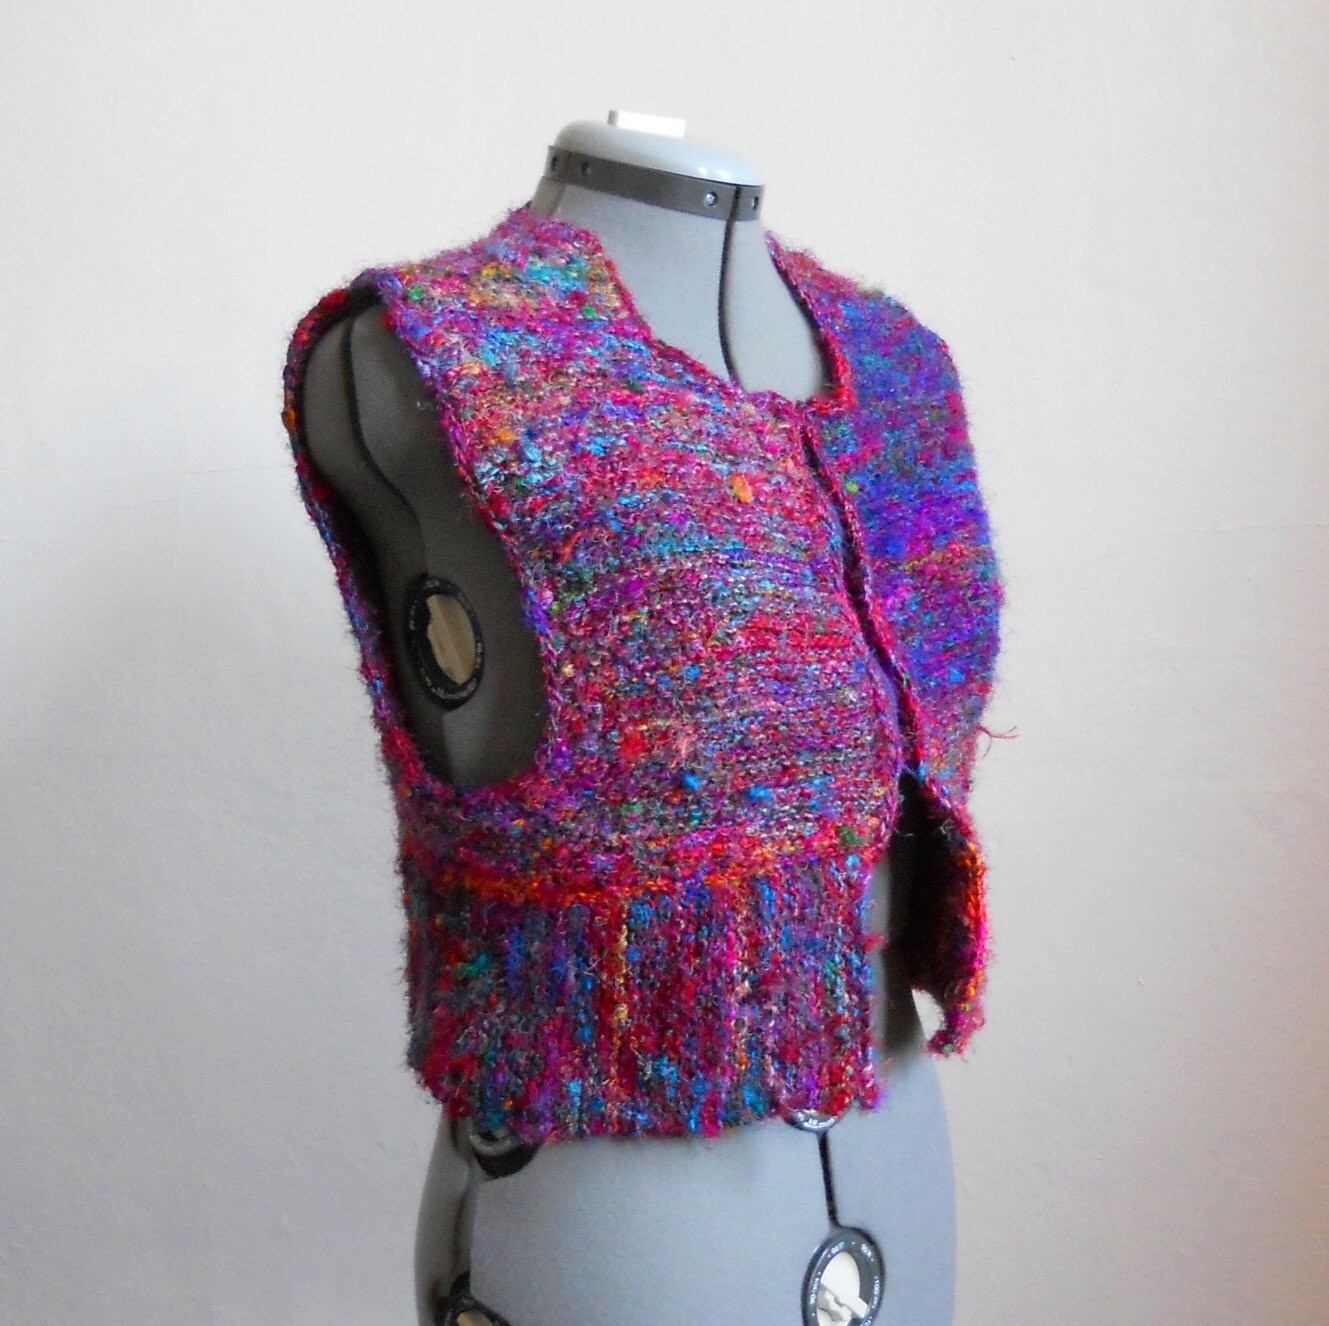 Knitting Pattern PDF Sari Silk Vest